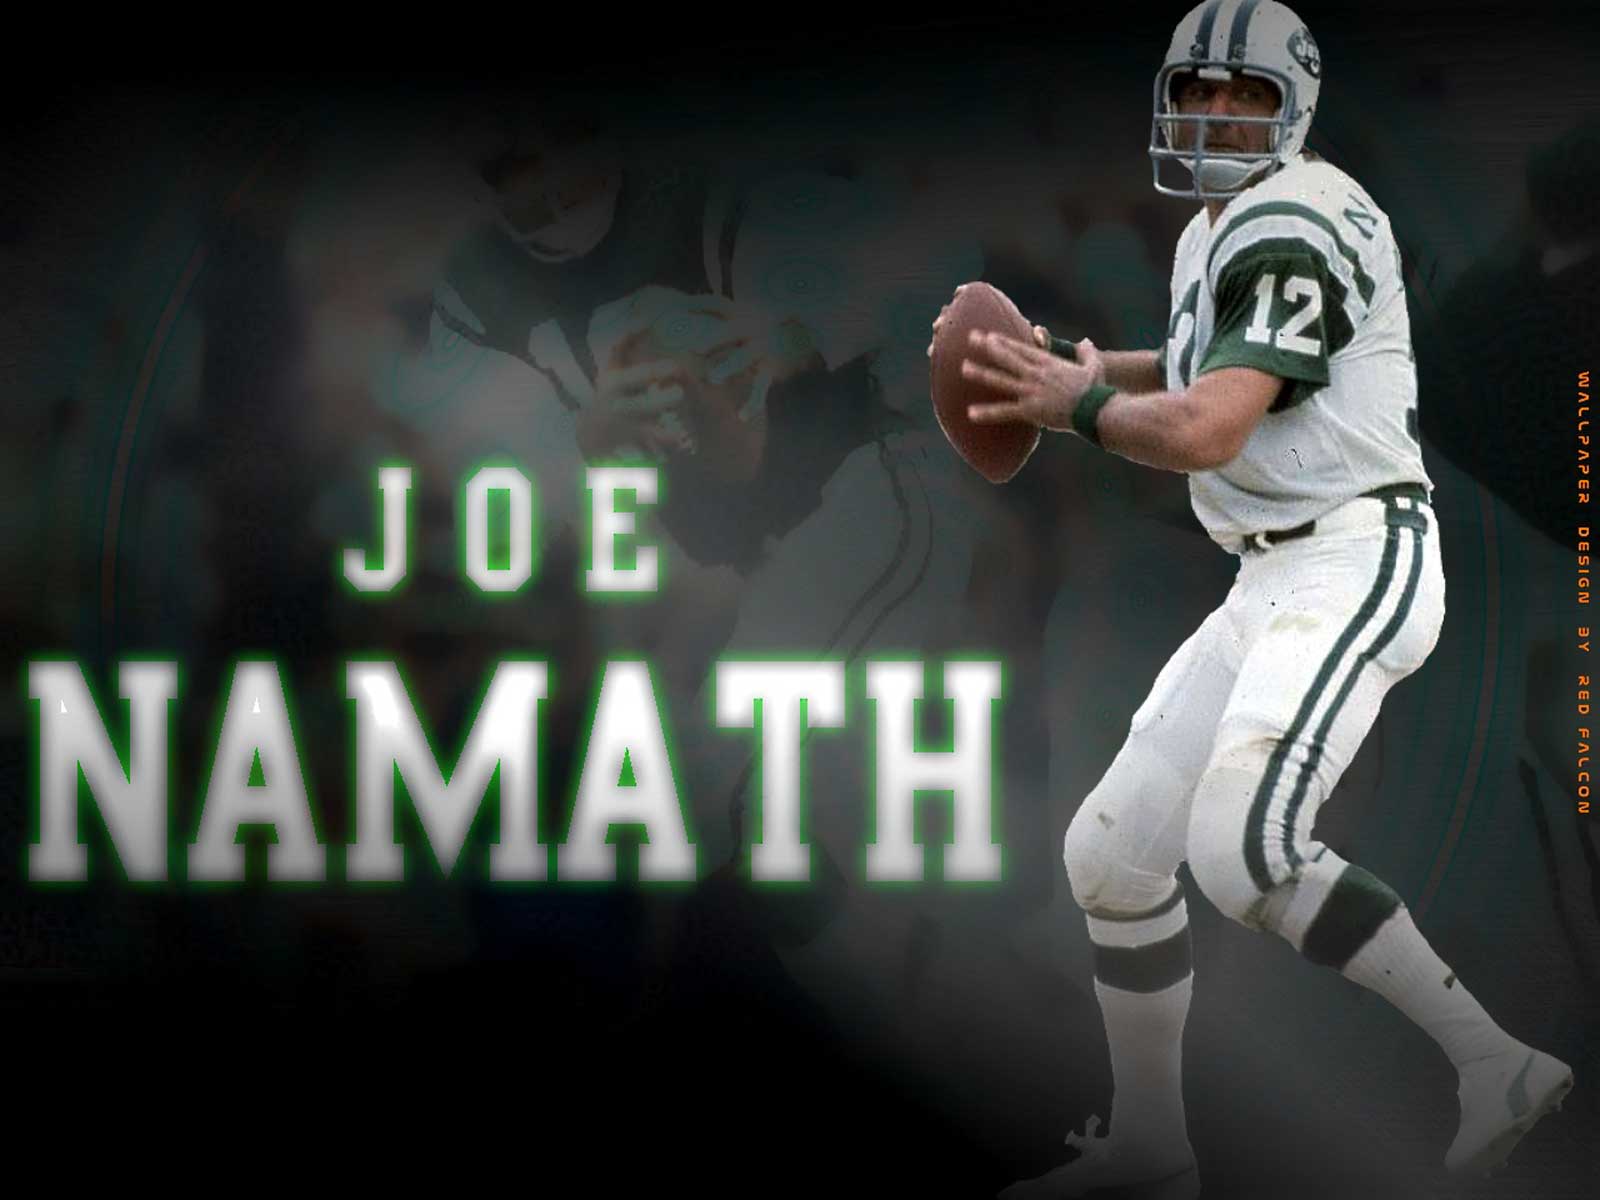 Classic Jets Wallpaper: Joe Namath. Football Team Picture